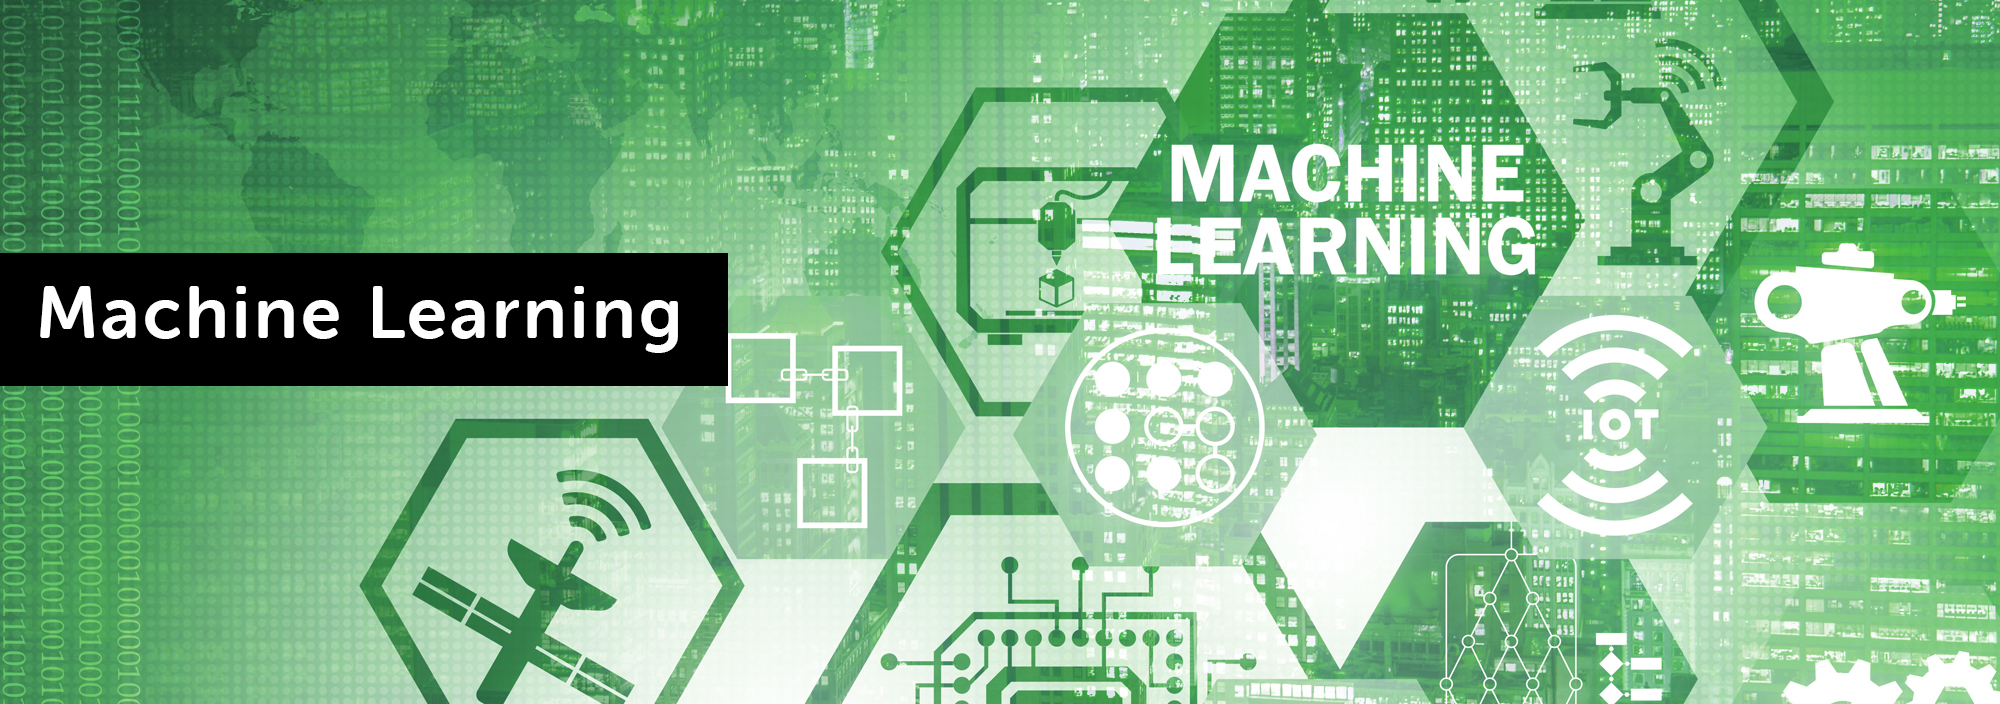 blog-machinelearning2021